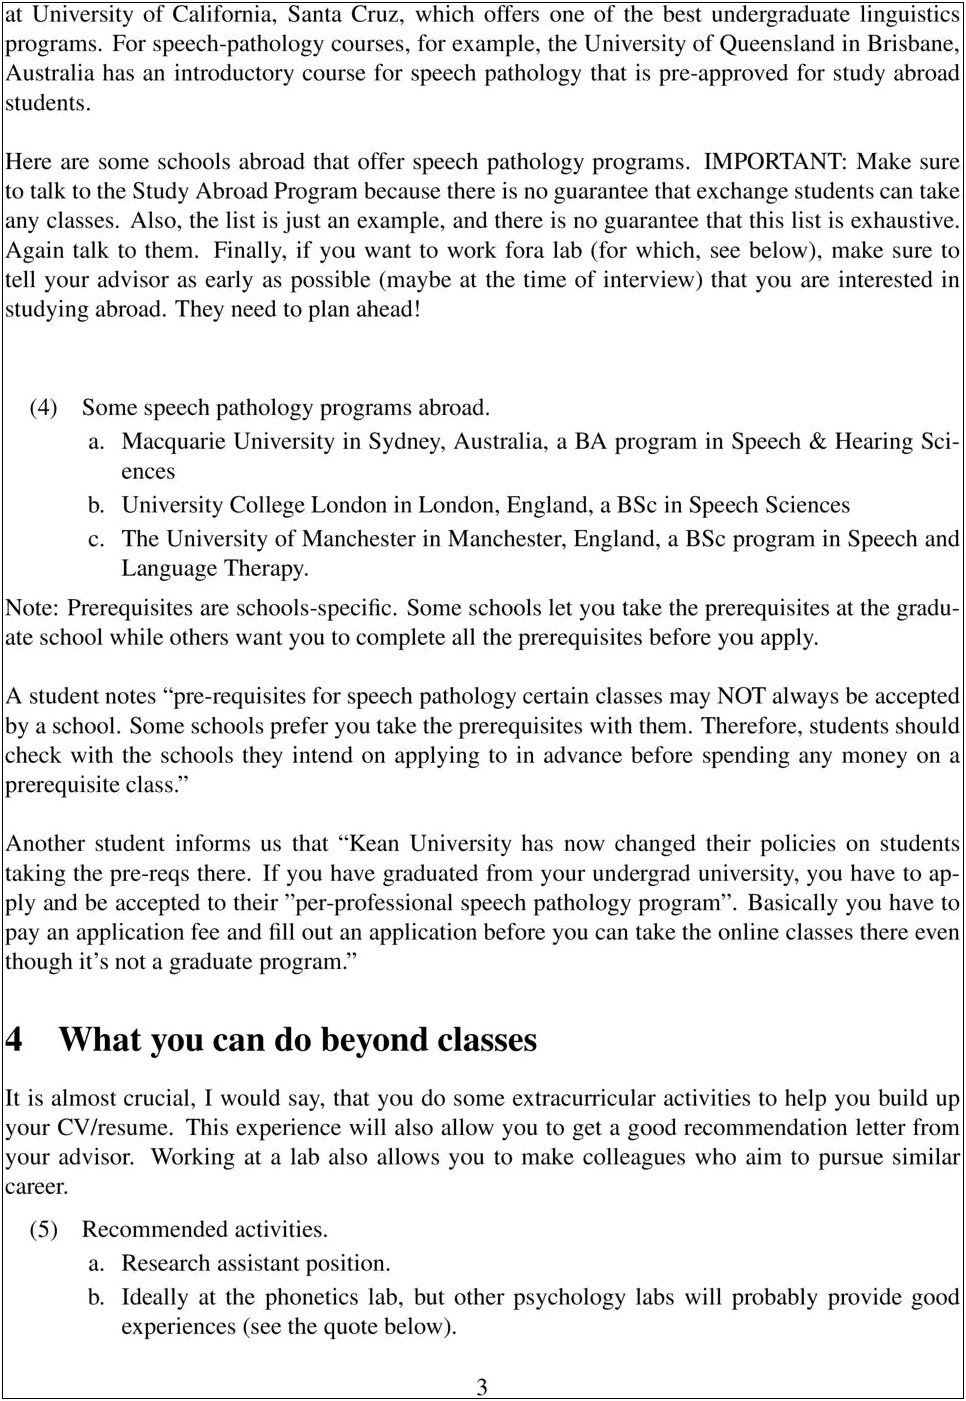 Graduate School Resume For Speech Pathology Example